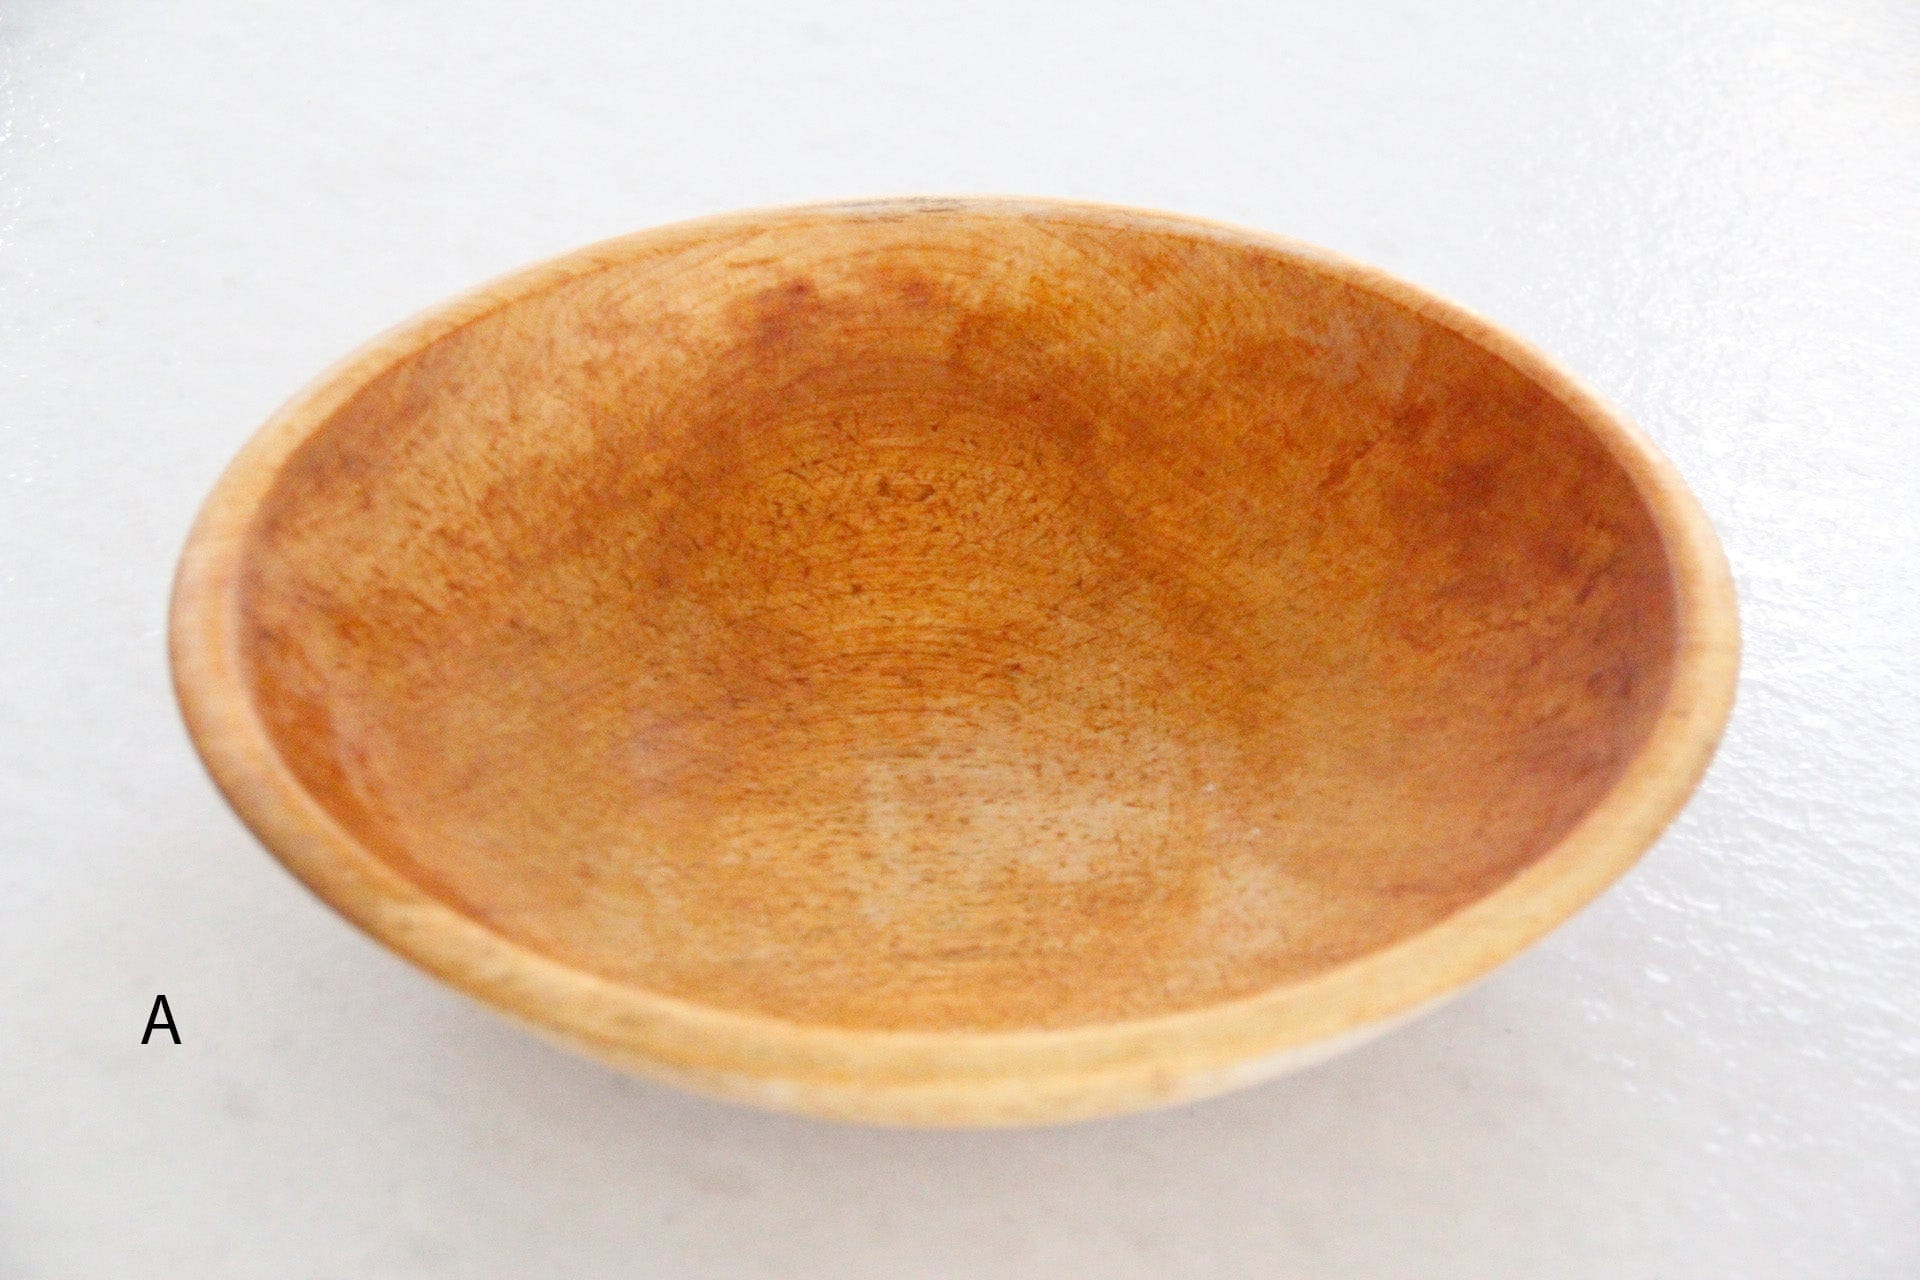 Vintage Wood Bowl | Medium Bowl A details